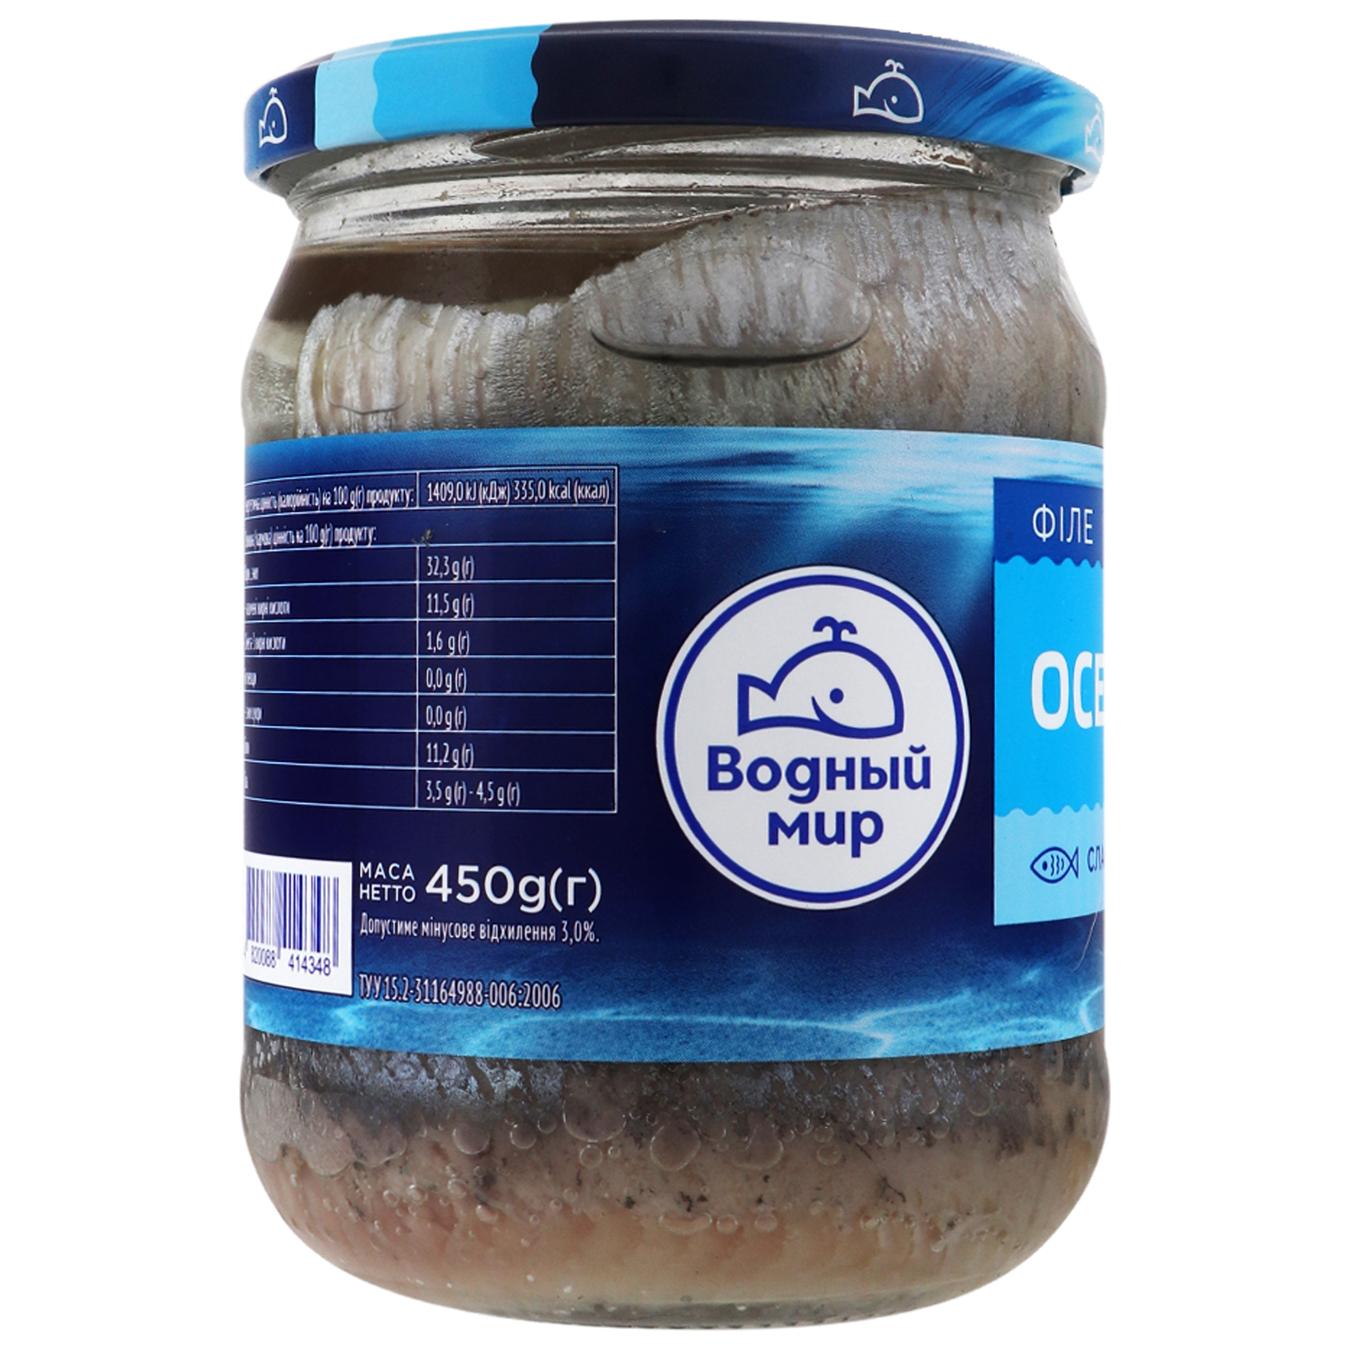 Water World herring slightly salted in oil fillet glass jar 450g 4